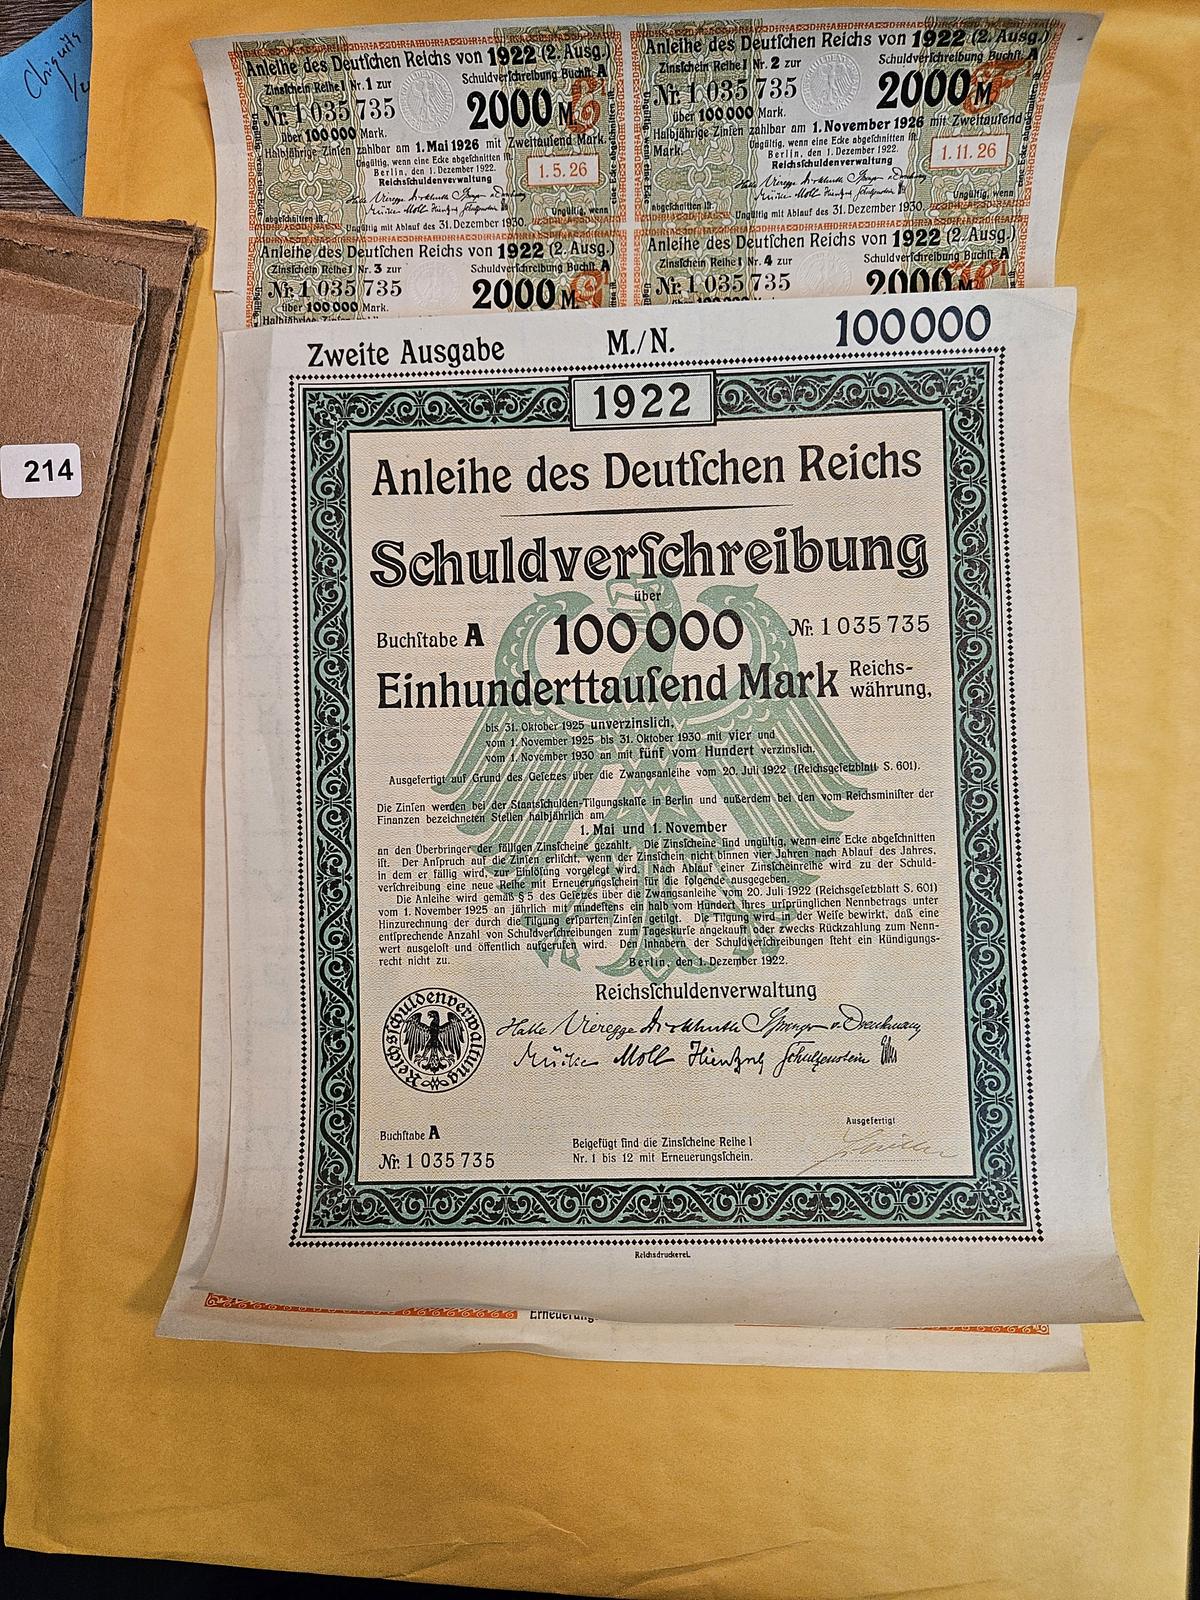 ** SCARCE! 1922 German 100,000 Mark Bond and Coupon Sheet